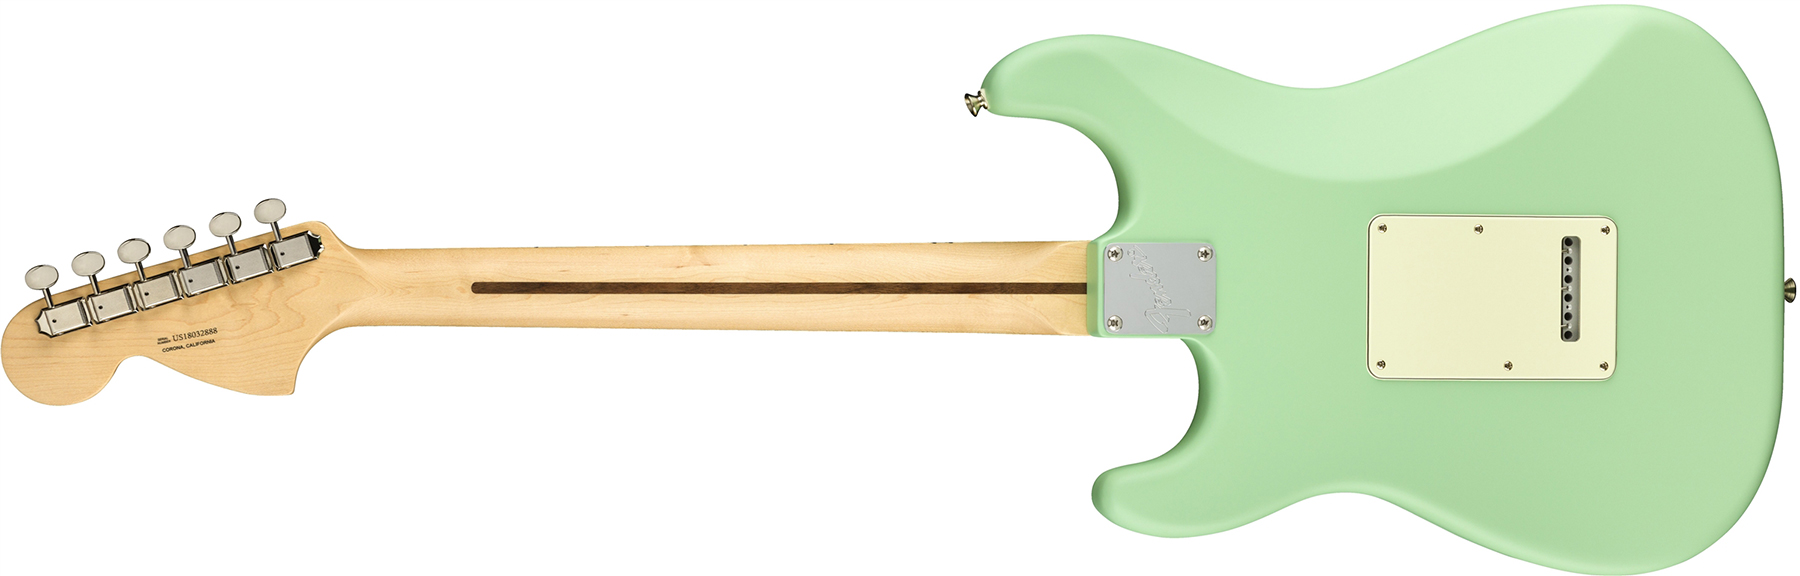 Fender Strat American Performer Usa Hss Mn - Satin Surf Green - Guitarra eléctrica con forma de str. - Variation 1